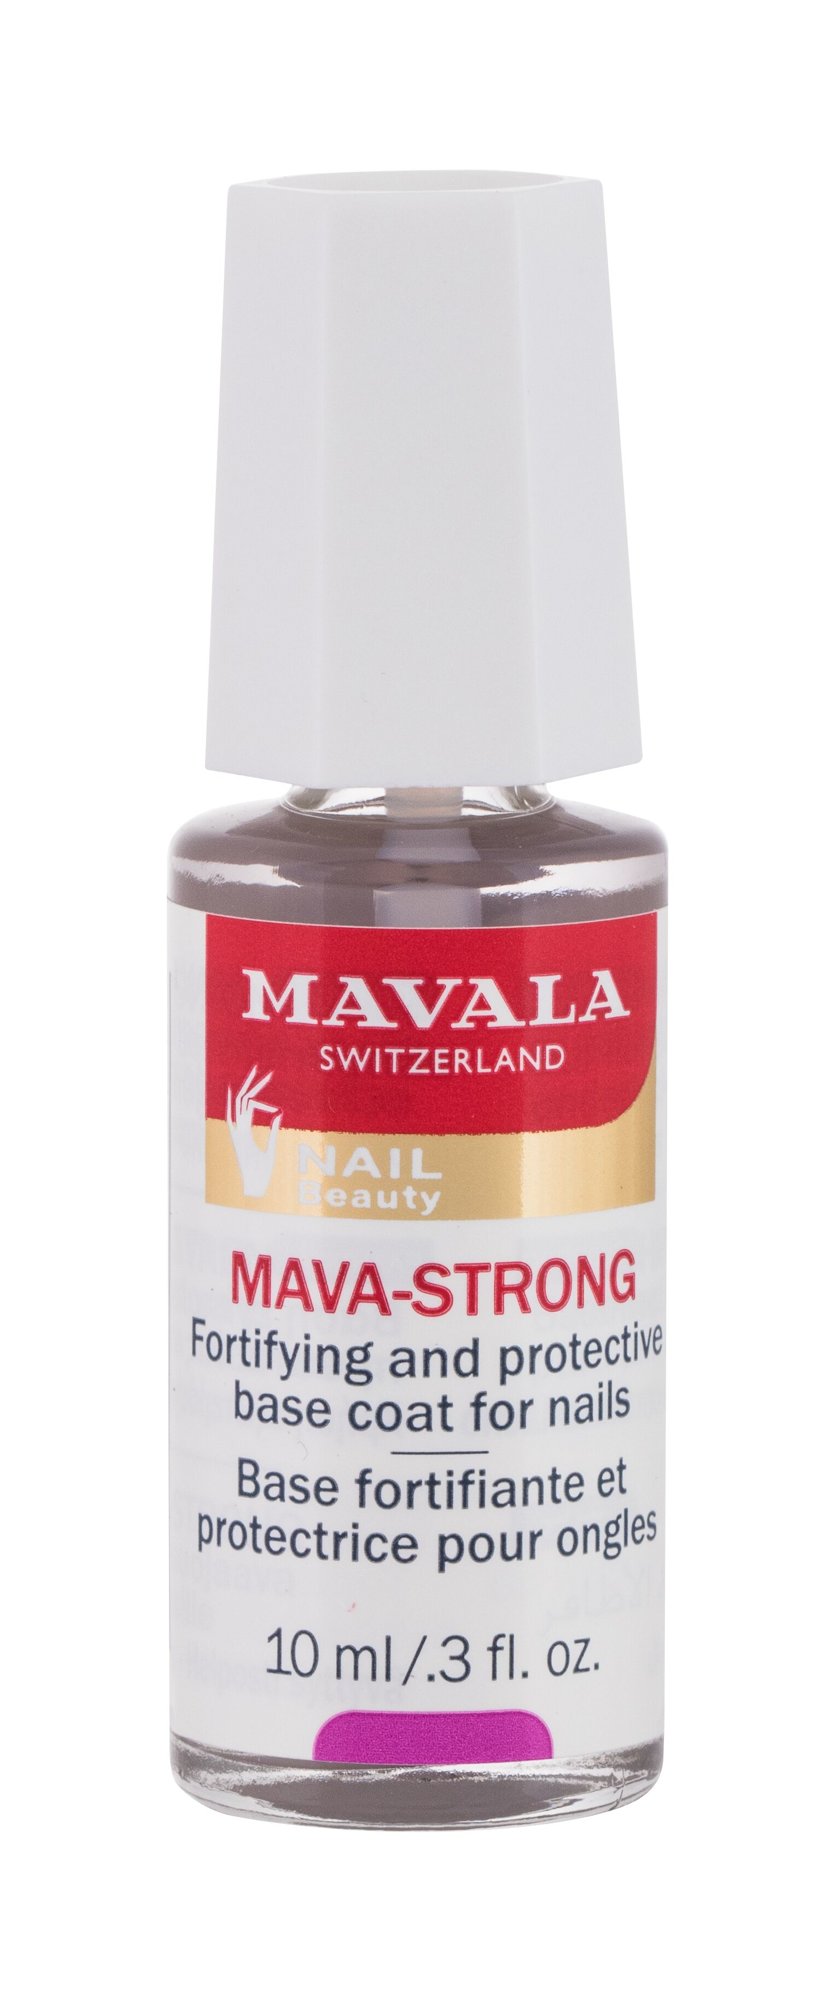 MAVALA Nail Beauty Mava-Strong nagų priežiūrai